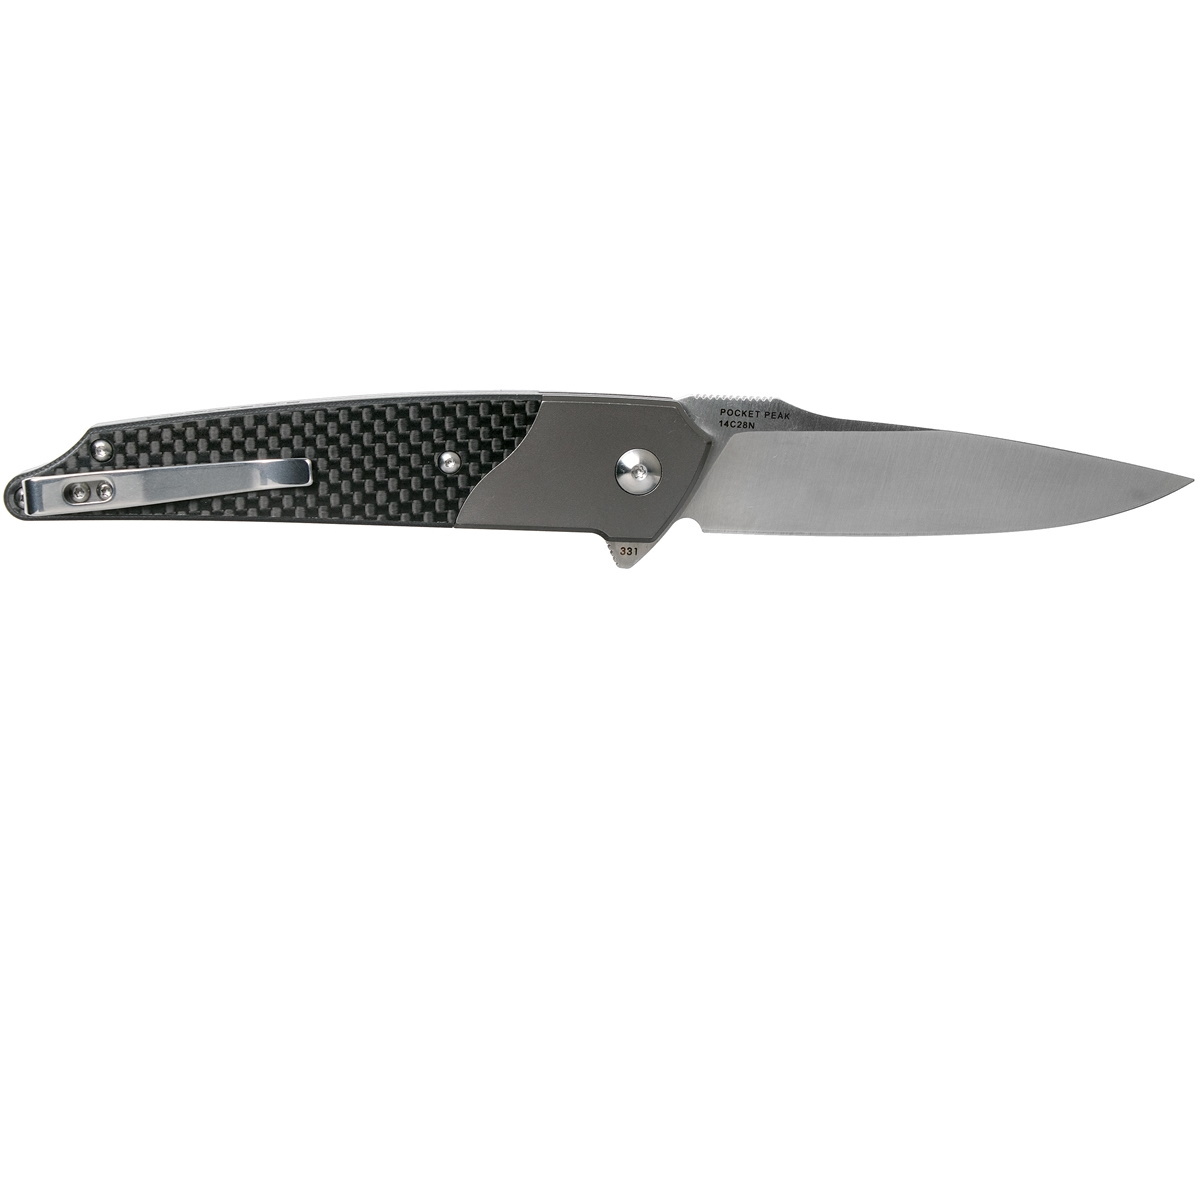 Складной нож Pocket Peak Grey, Amare Knives - фото 3